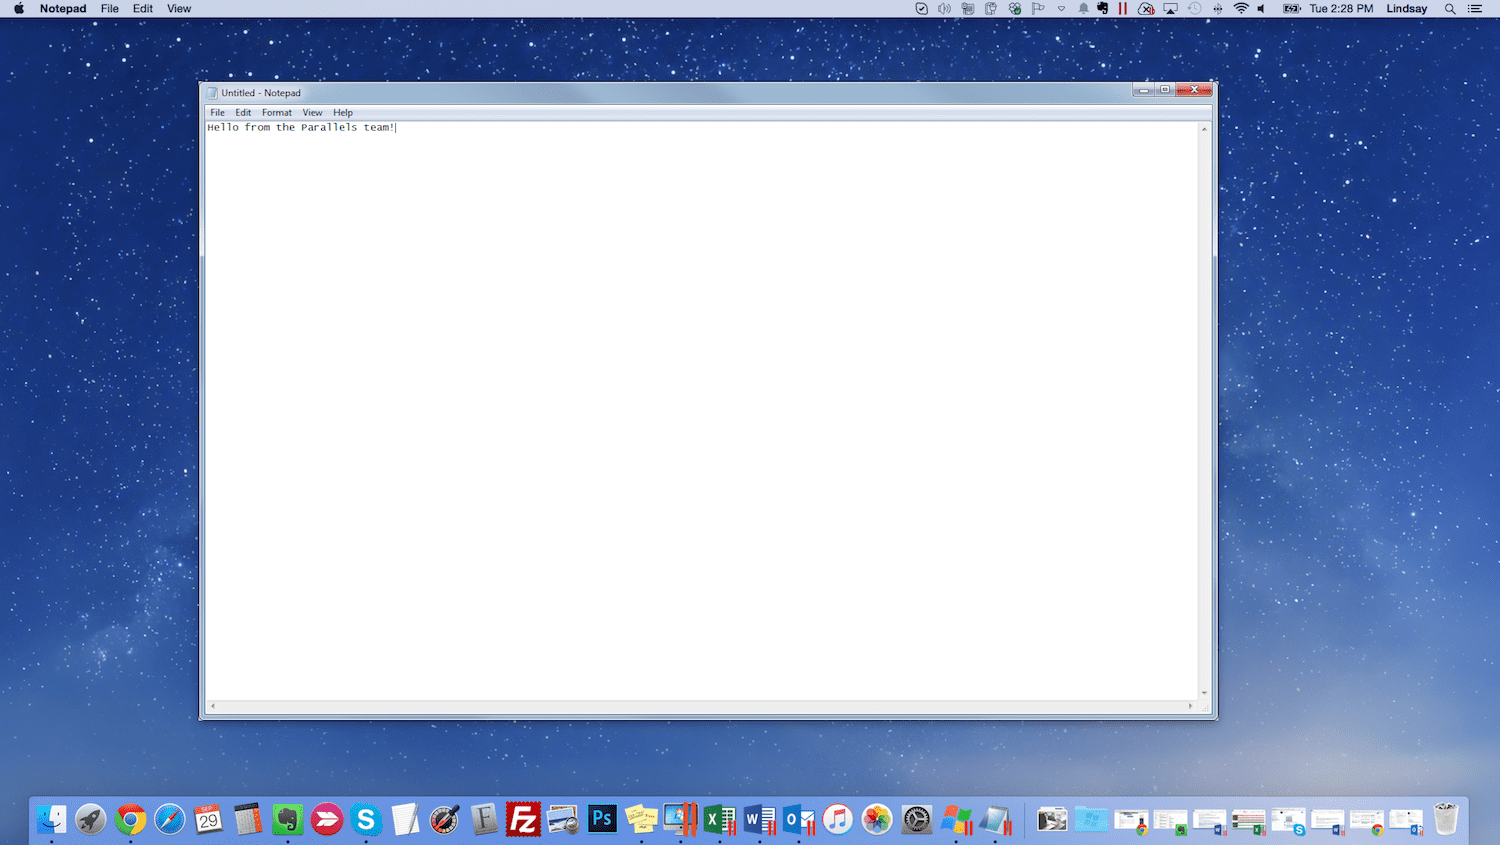 Windows Notepad running on my Mac desktop using Parallels Desktop in Coherence Mode.